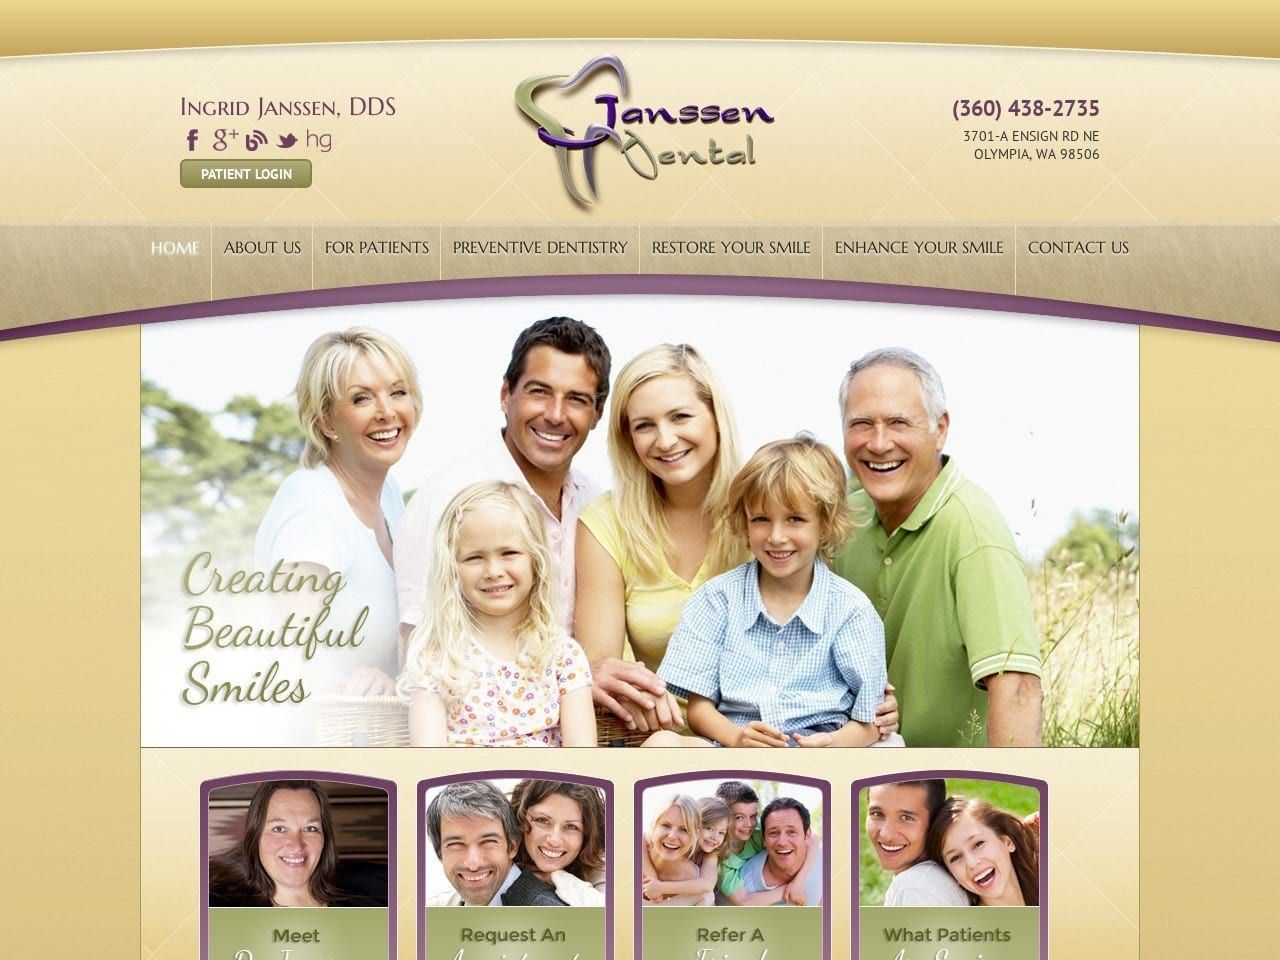 Janssen Dental Website Screenshot from janssendental.com